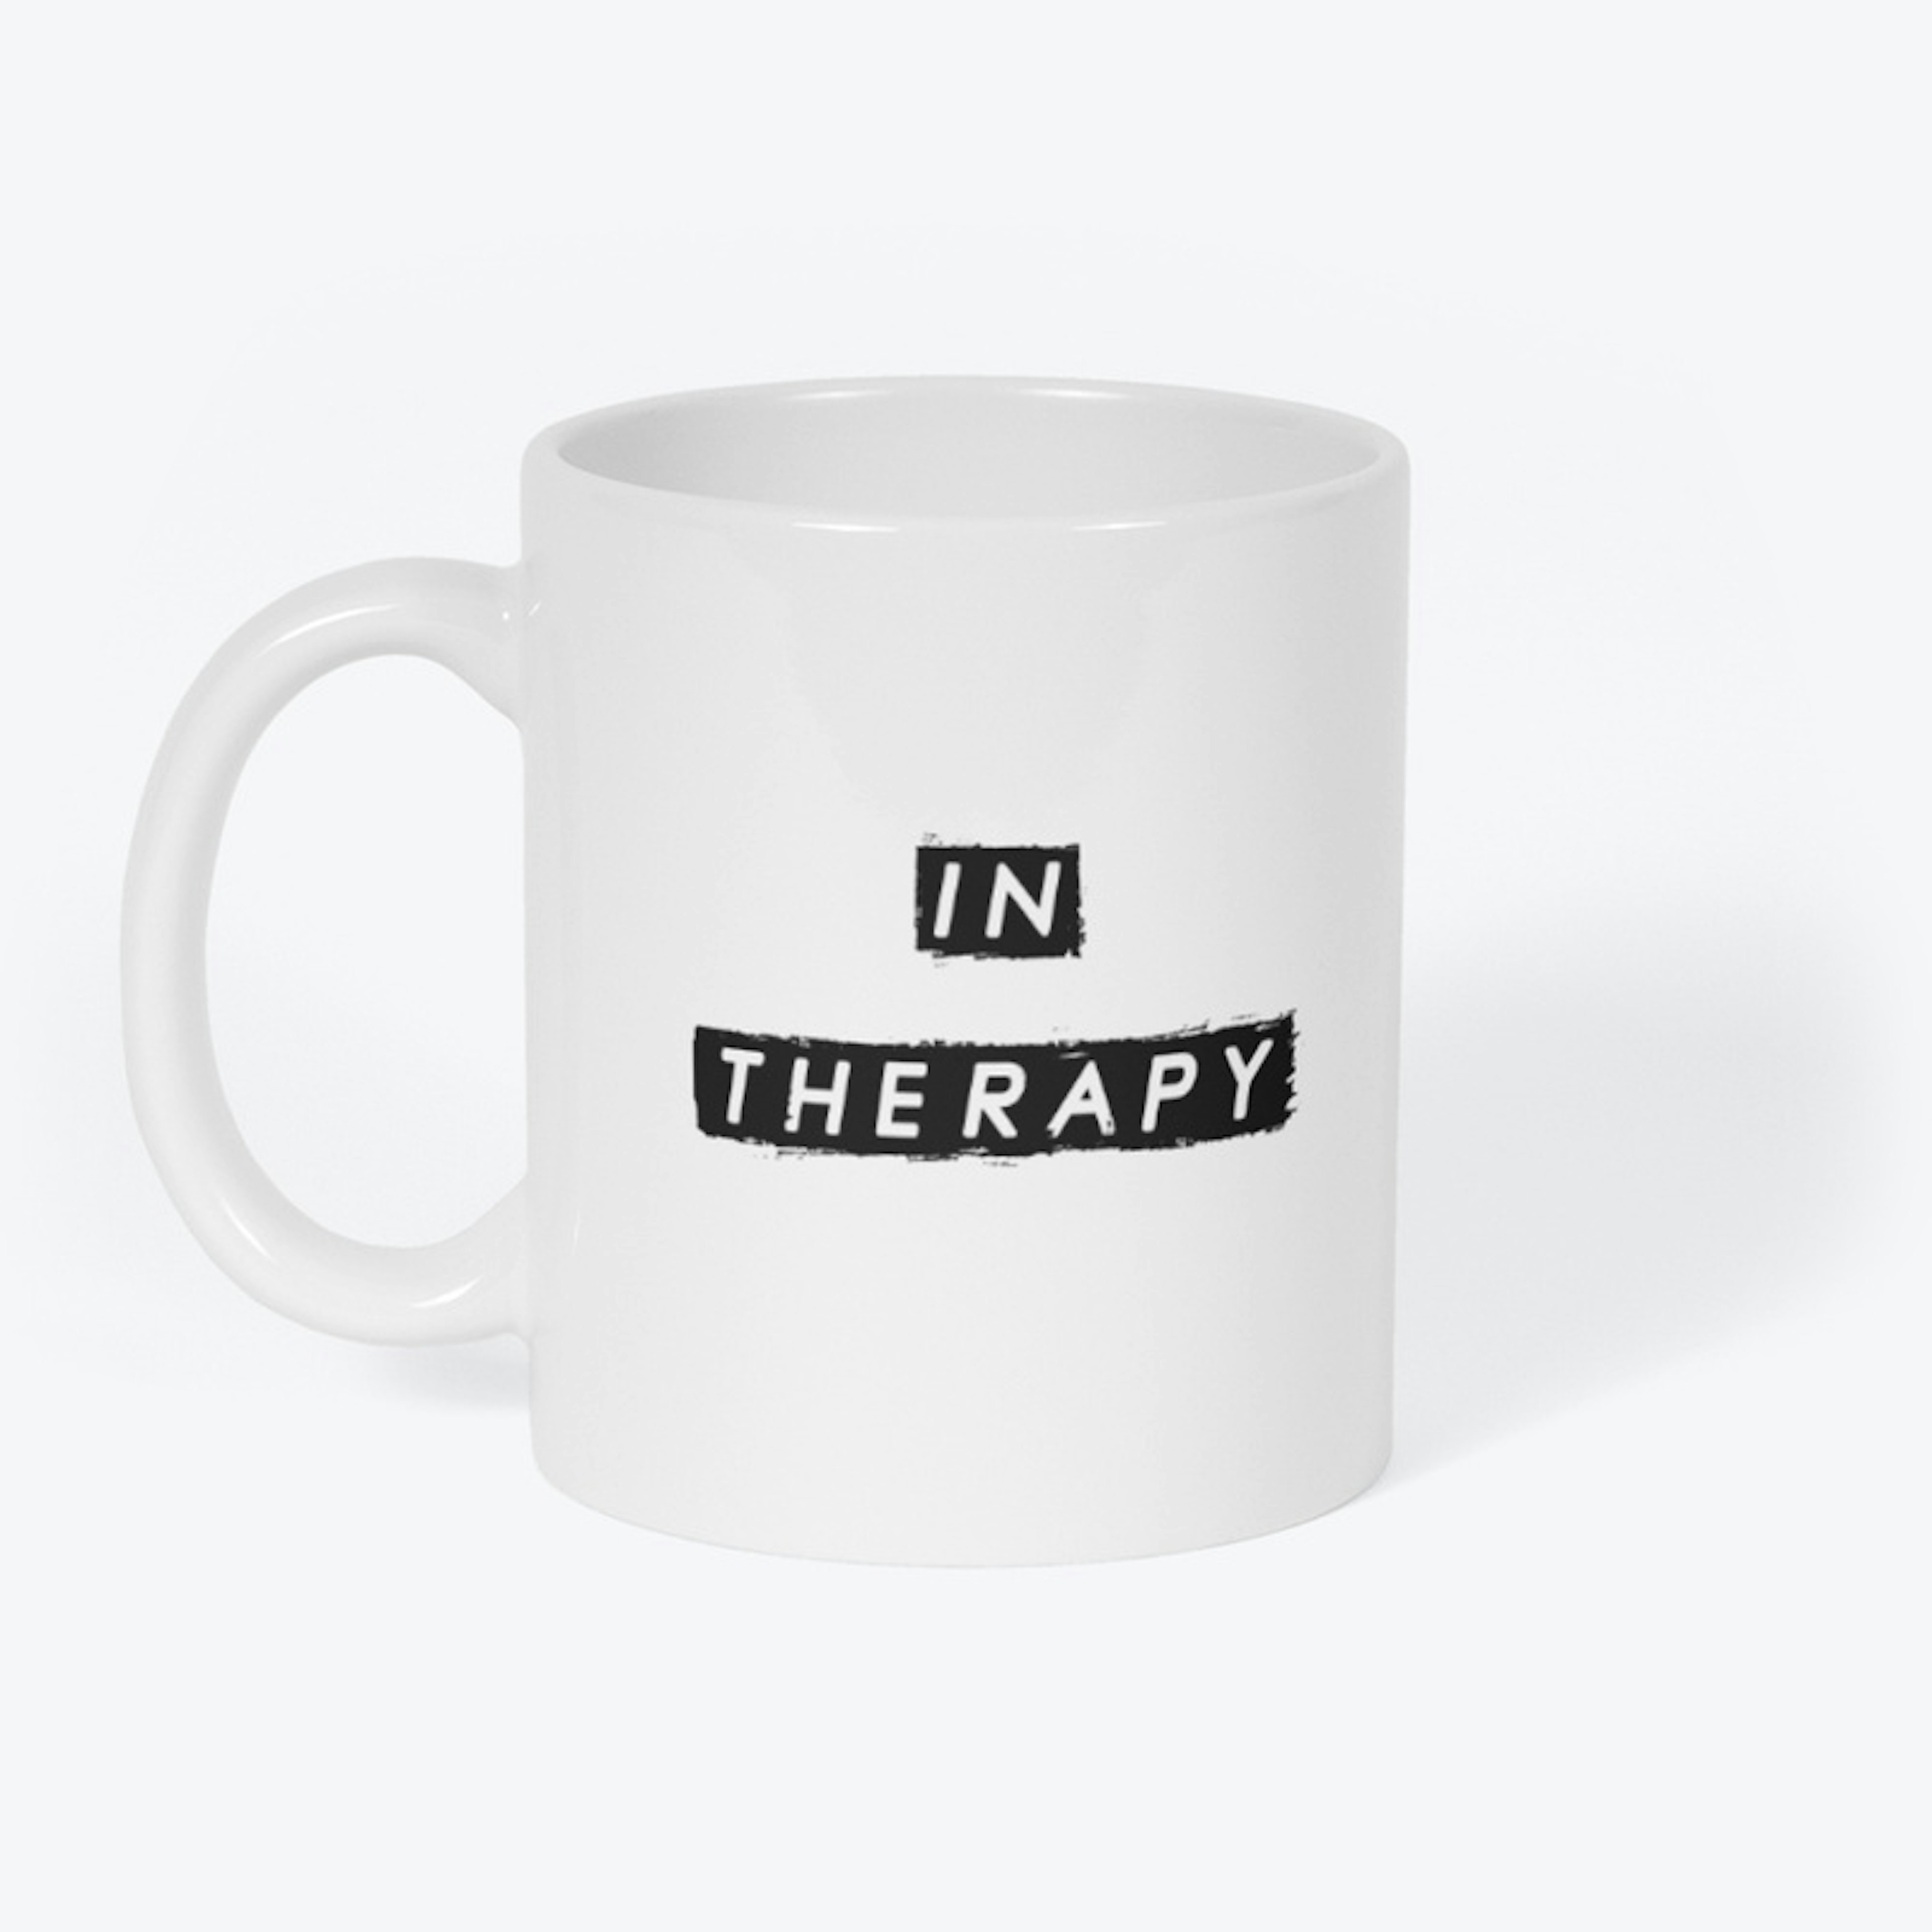 IN THERAPY Mug